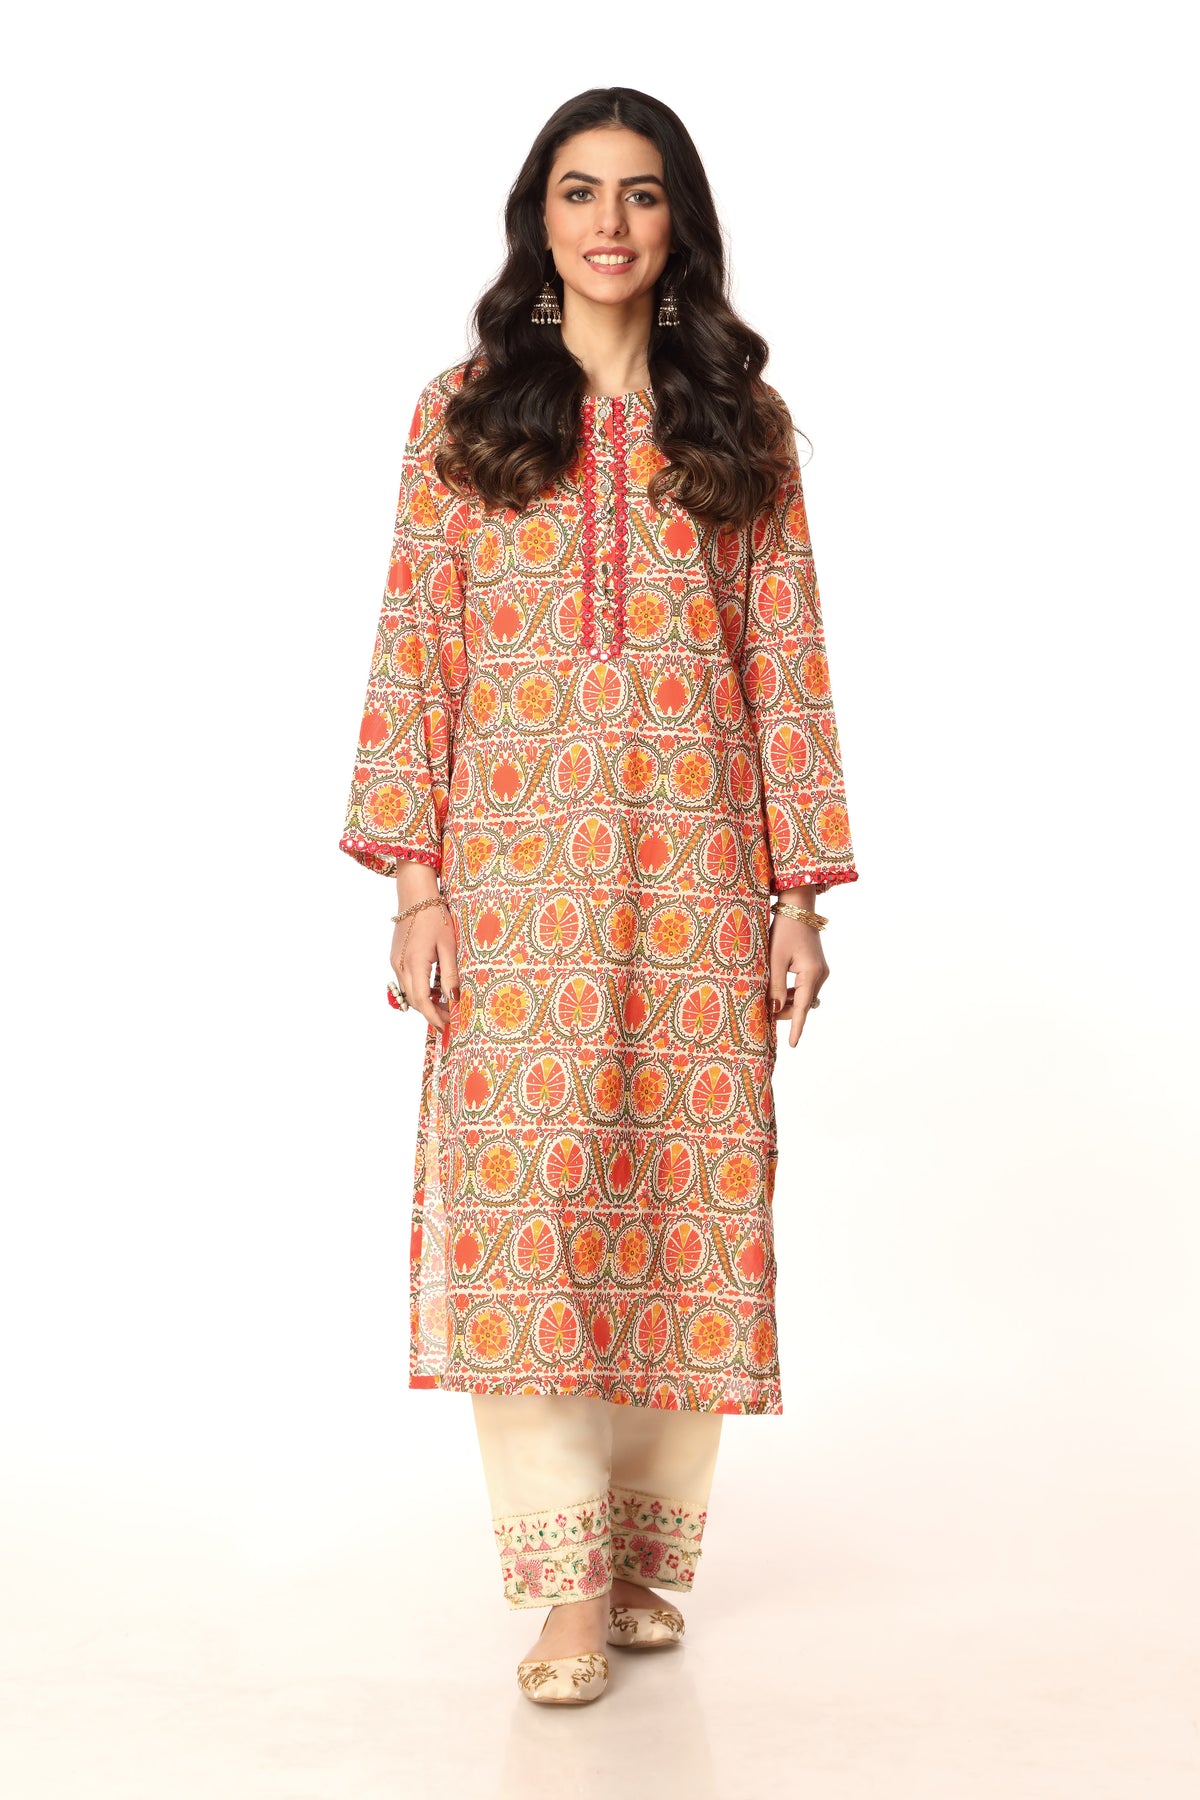 Suzani Jaal in Multi coloured Printed Lawn fabric